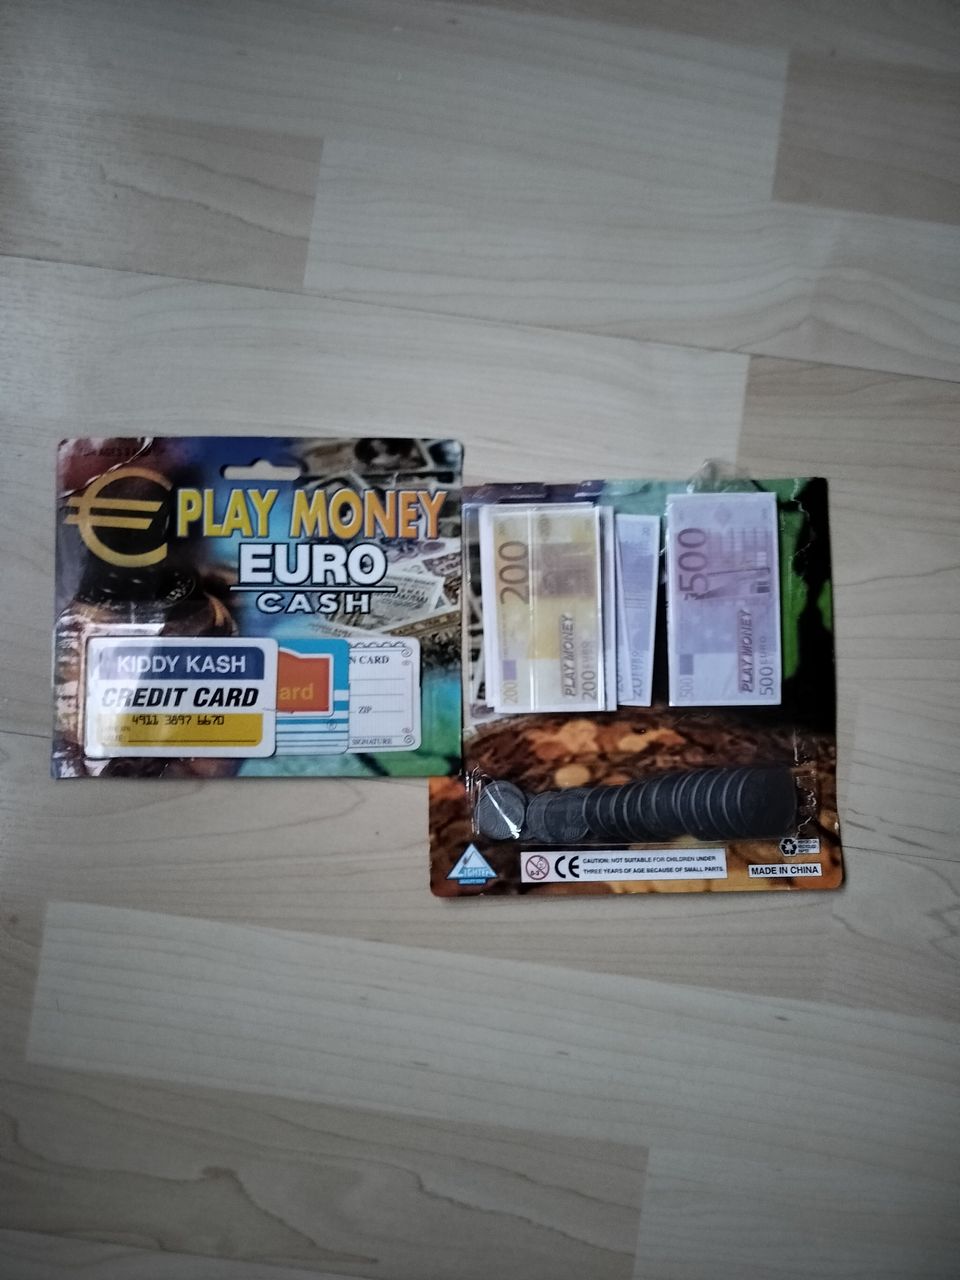 Play monet euro